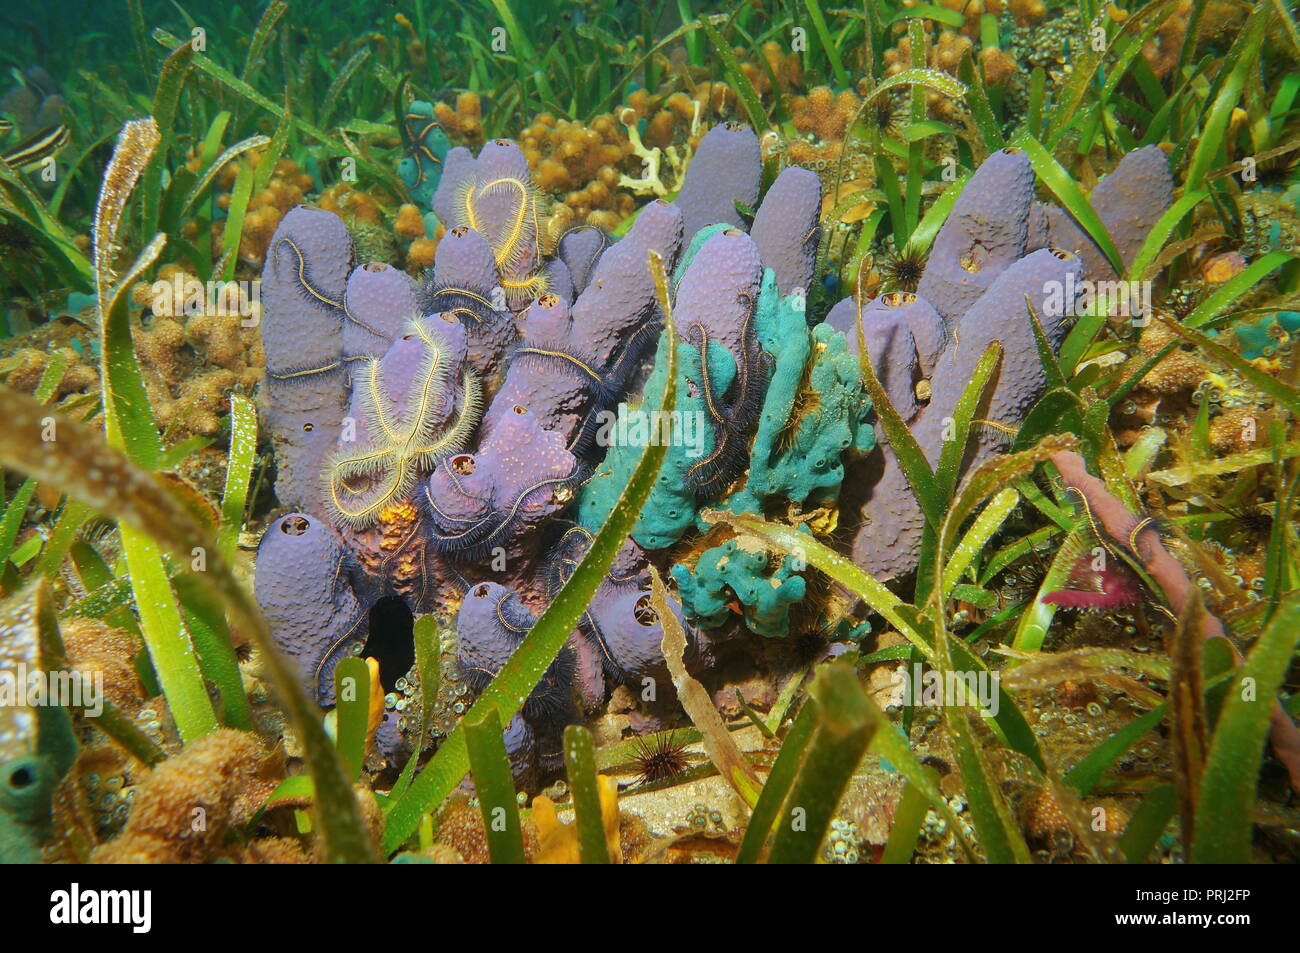 Colorful sea sponges underwater, Aiolochroia crassa and Amphimedon erina with some brittle stars and turtlegrass, Caribbean sea, Panama Stock Photo